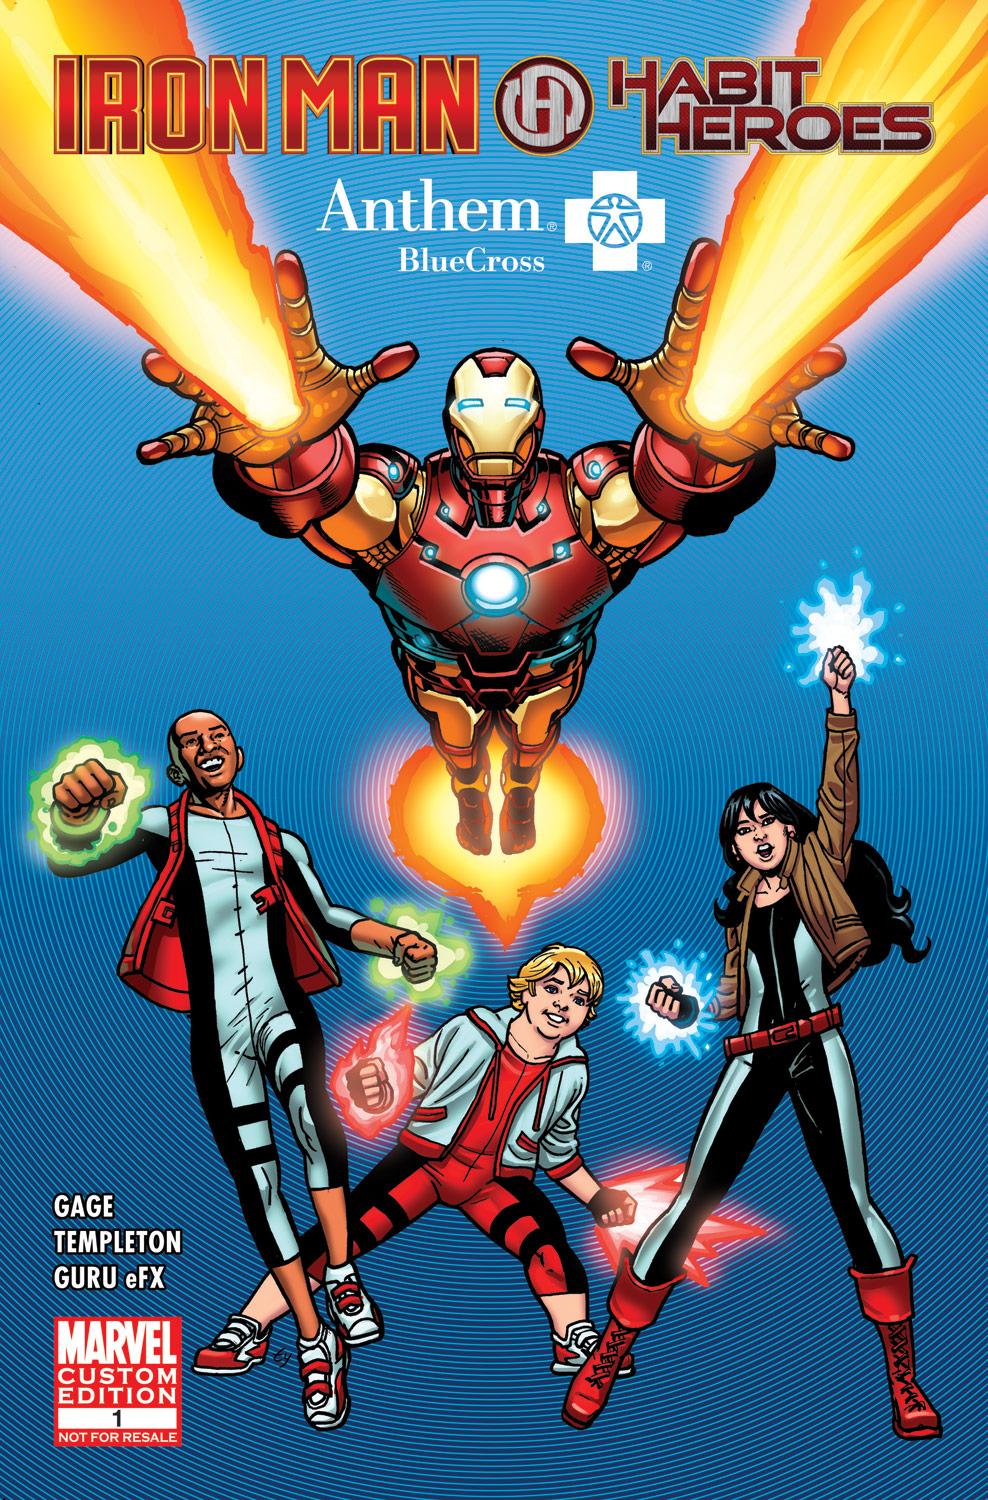 Habit Heroes and Iron Man Vol. 1 #1